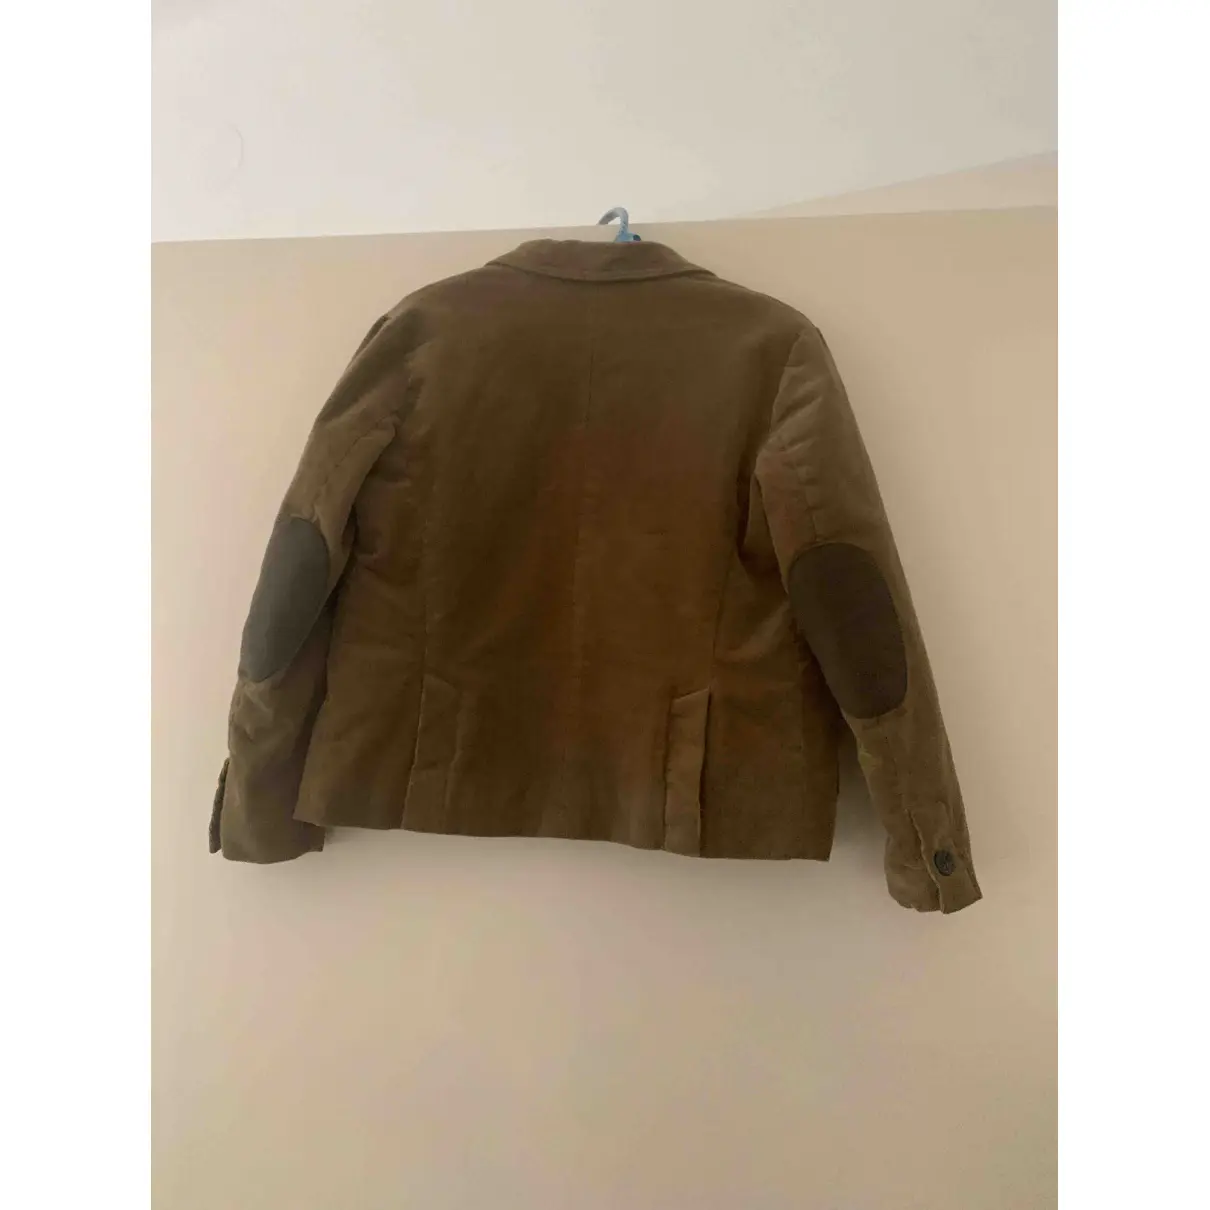 Buy Bonpoint Jacket & coat online